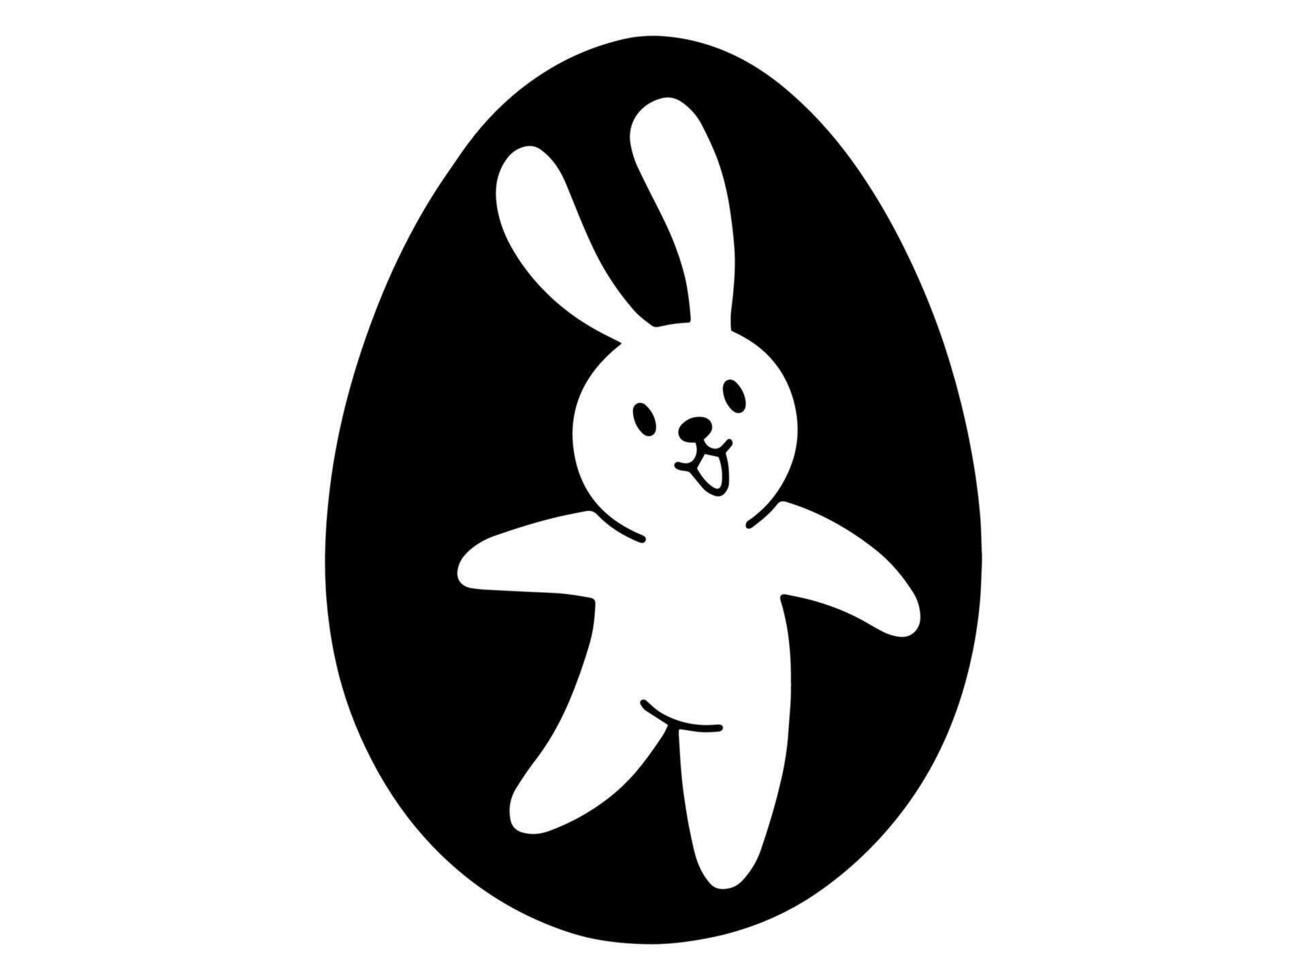 Easter Eggs Line Art Bunny vector